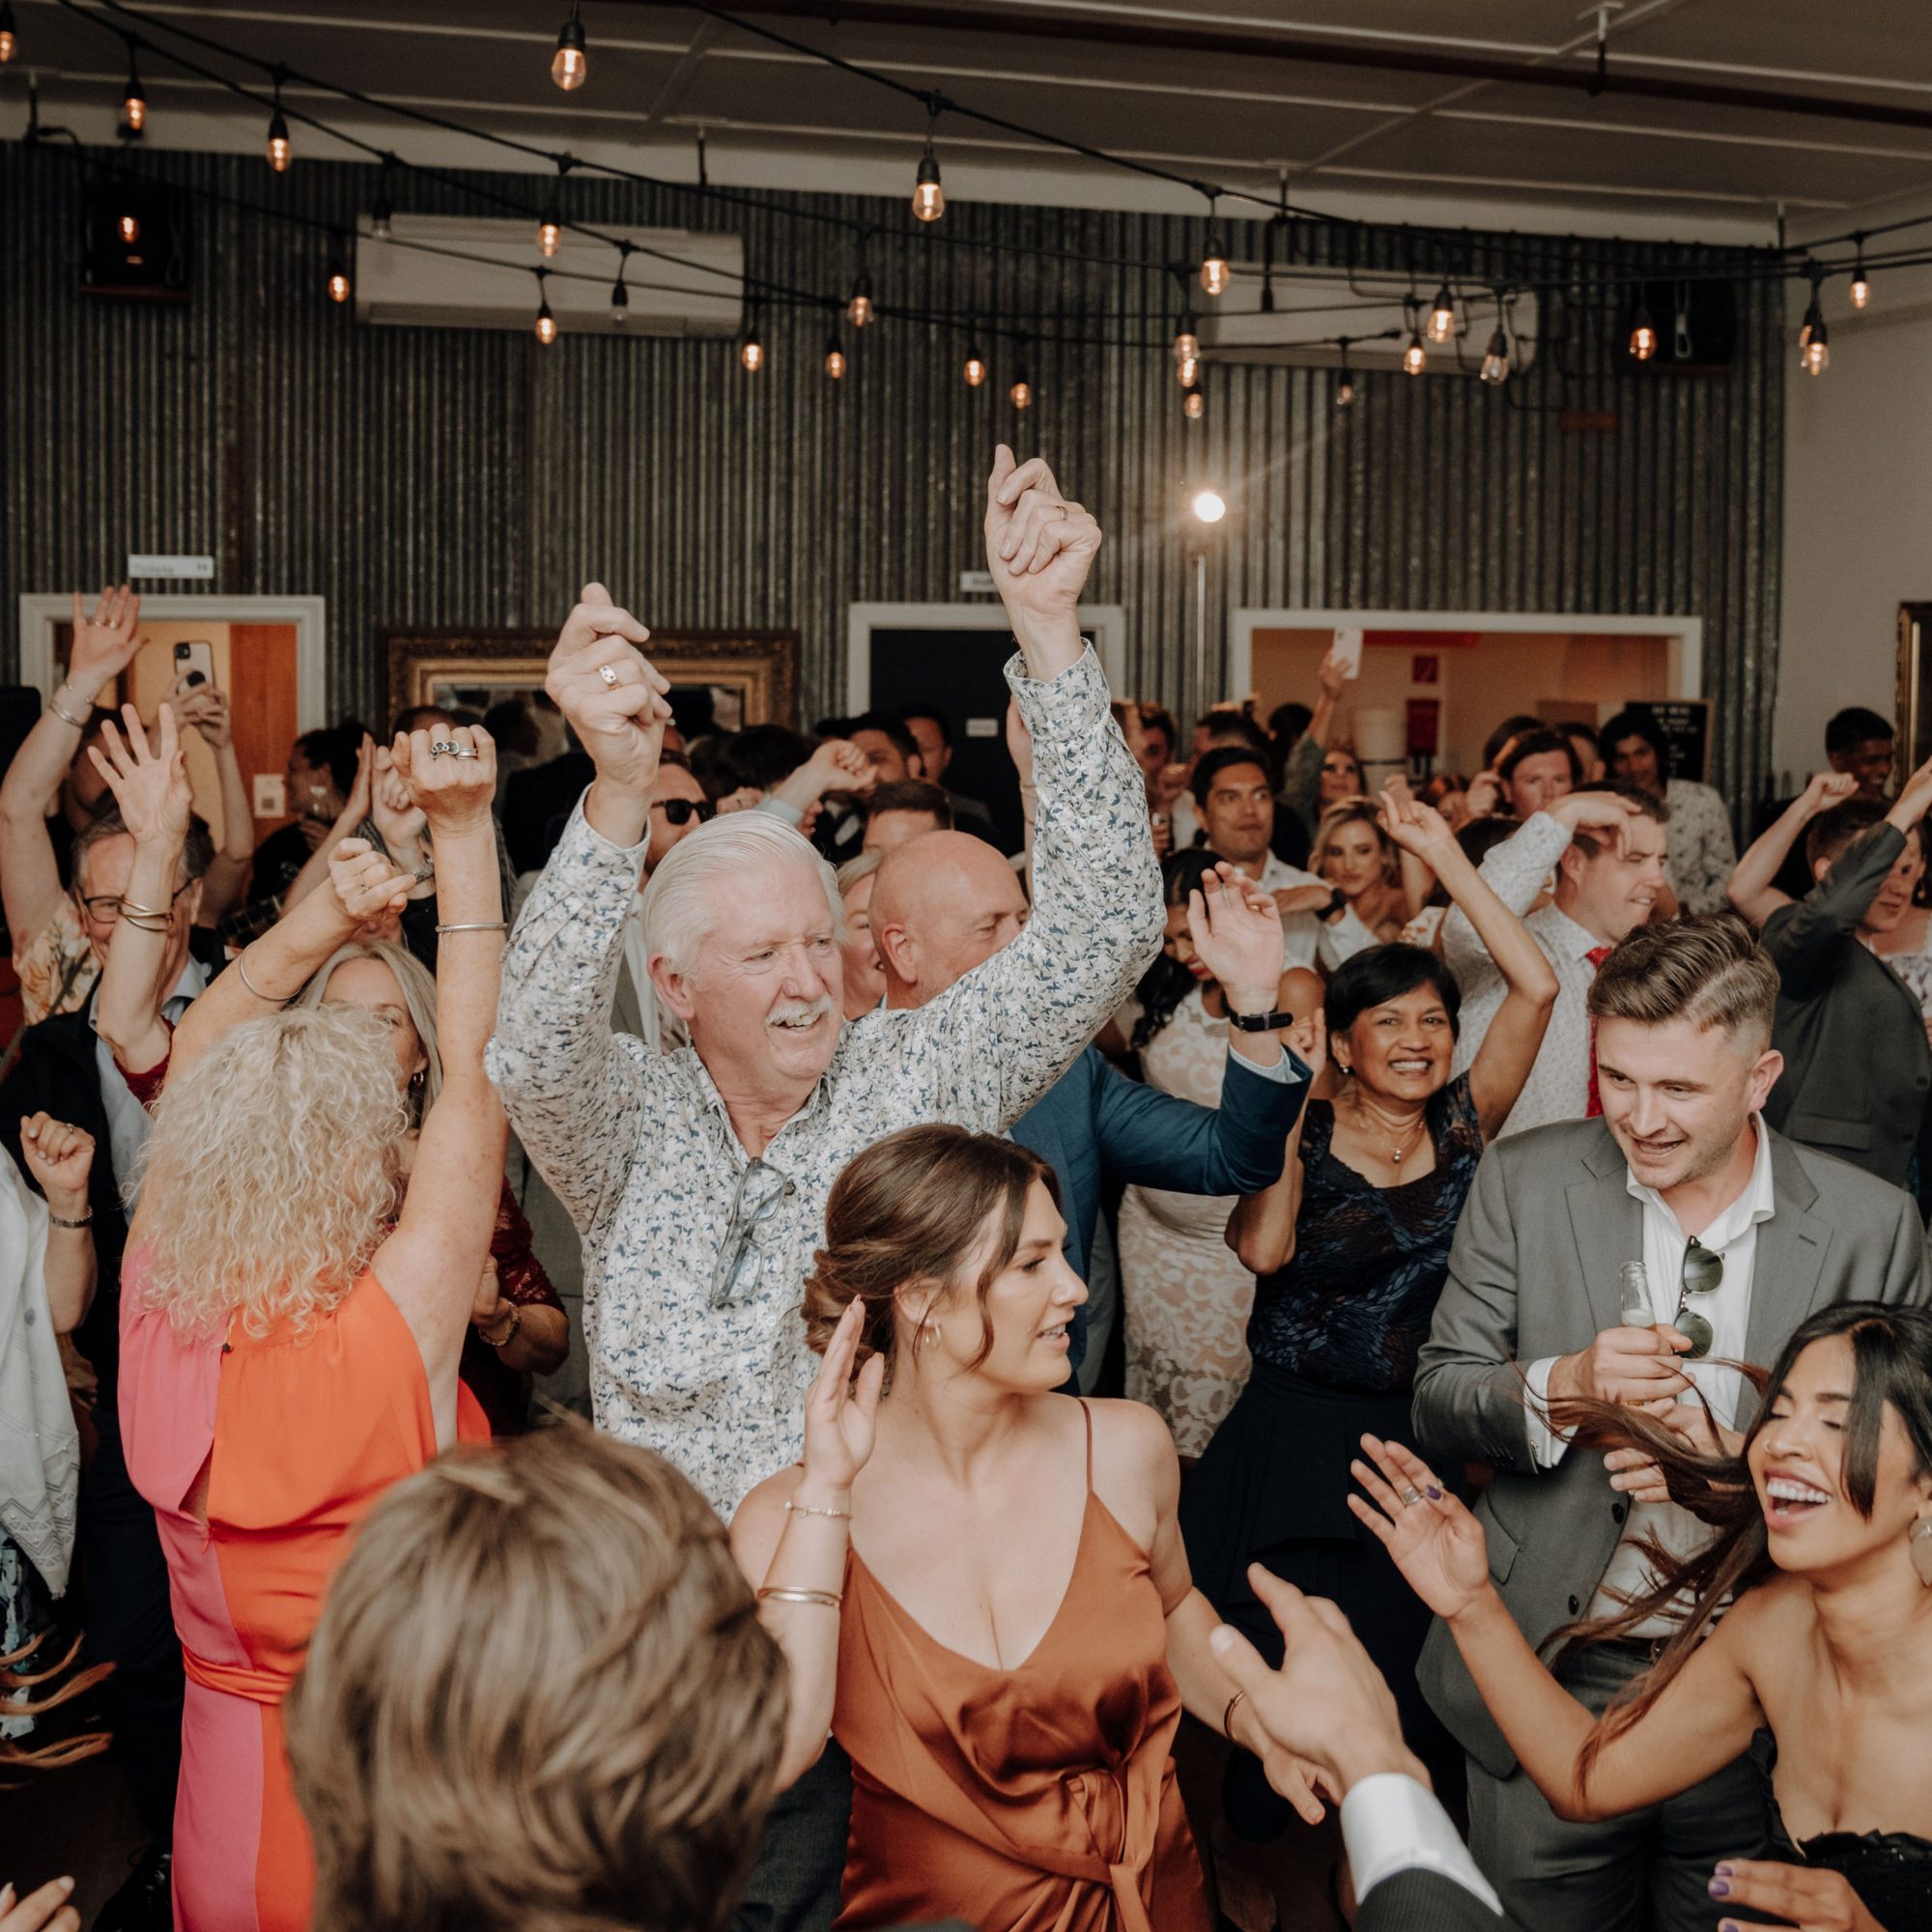 The best wedding dance floor song openers to kick-start the party